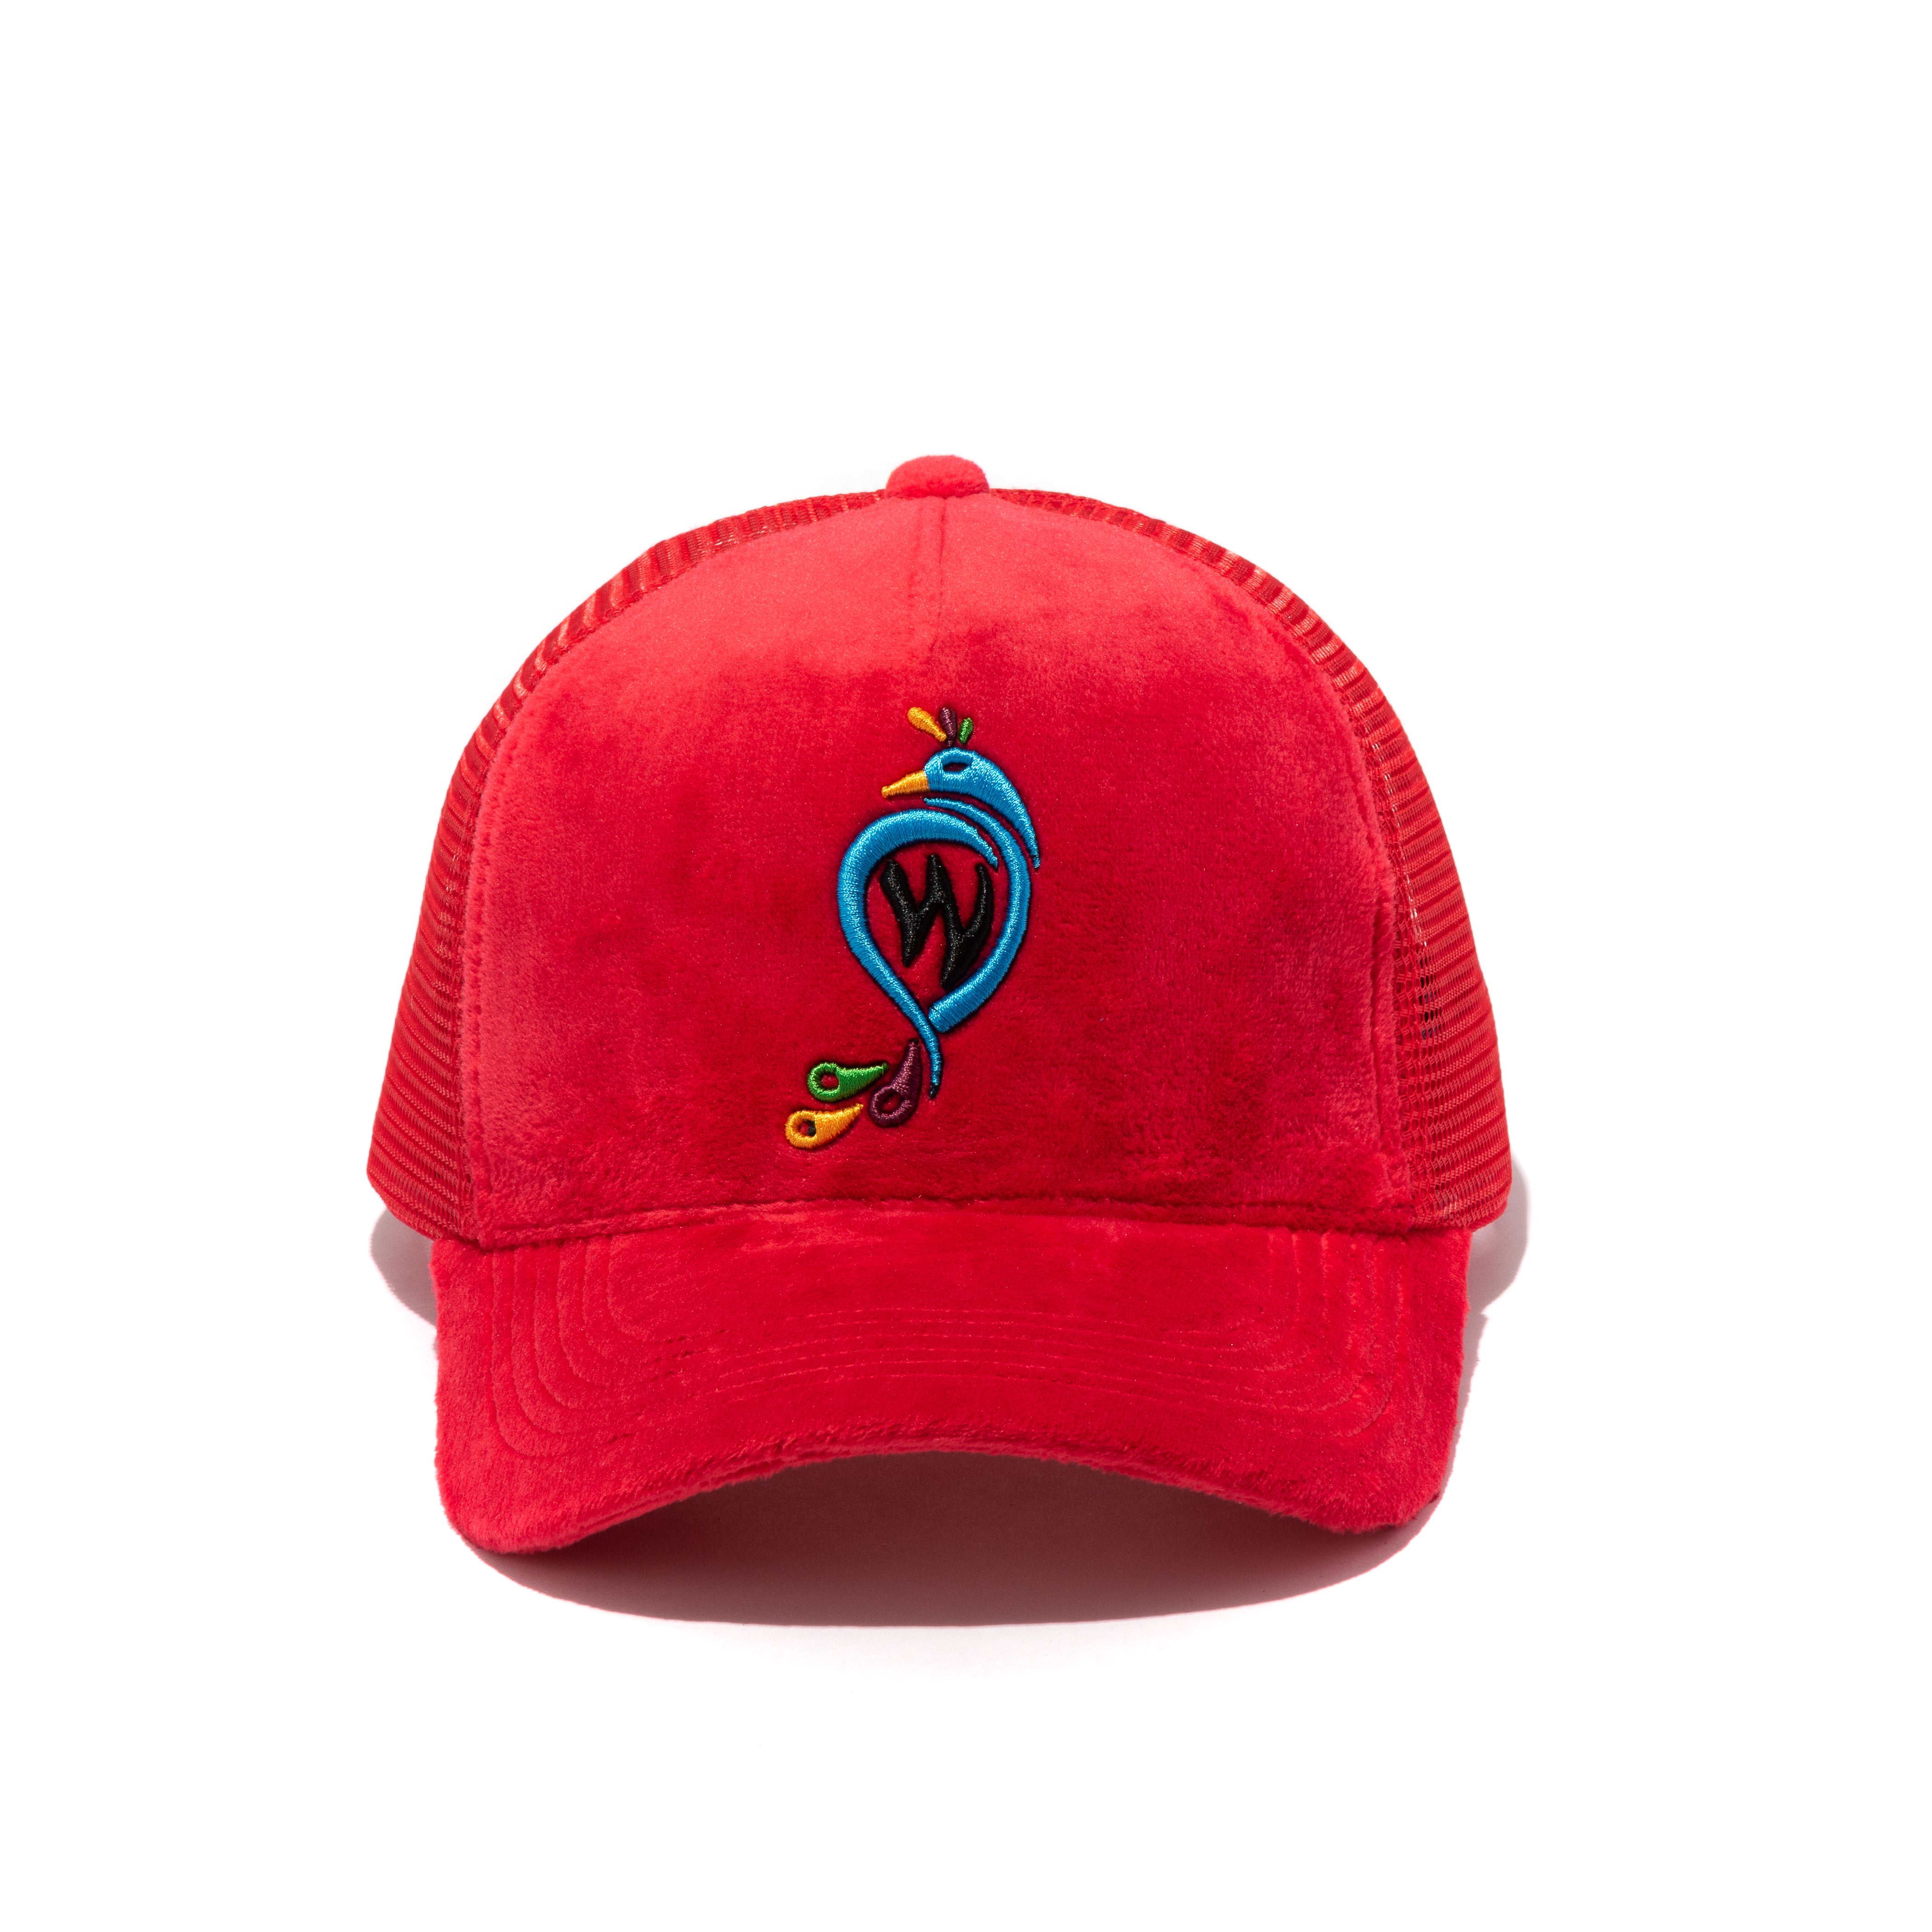 Trucker Hat Peacock-Red